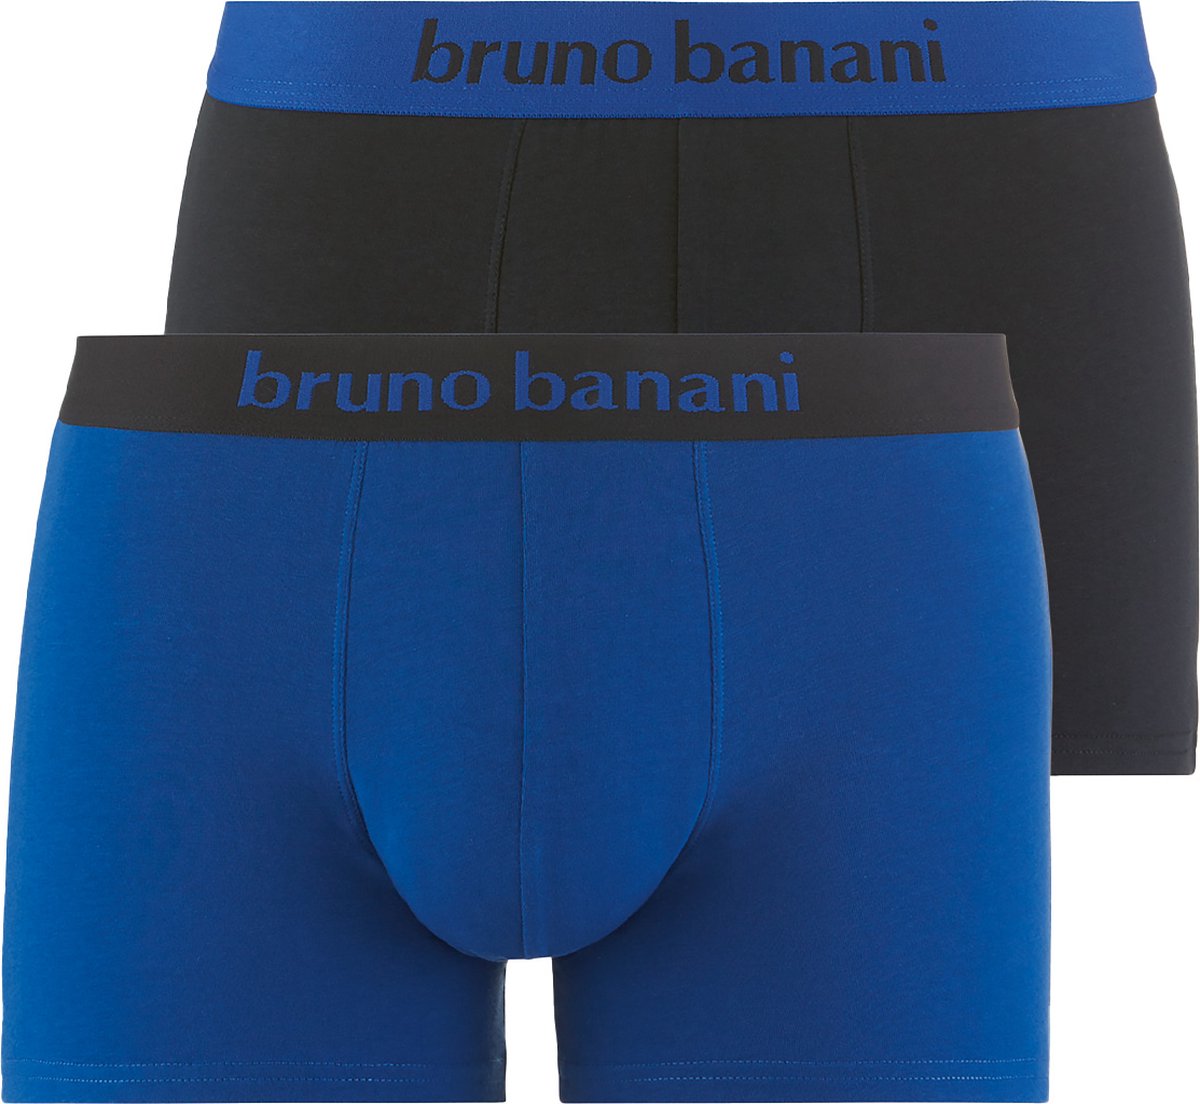 Bruno Banani Heren retro short / pant 2 pack Flowing